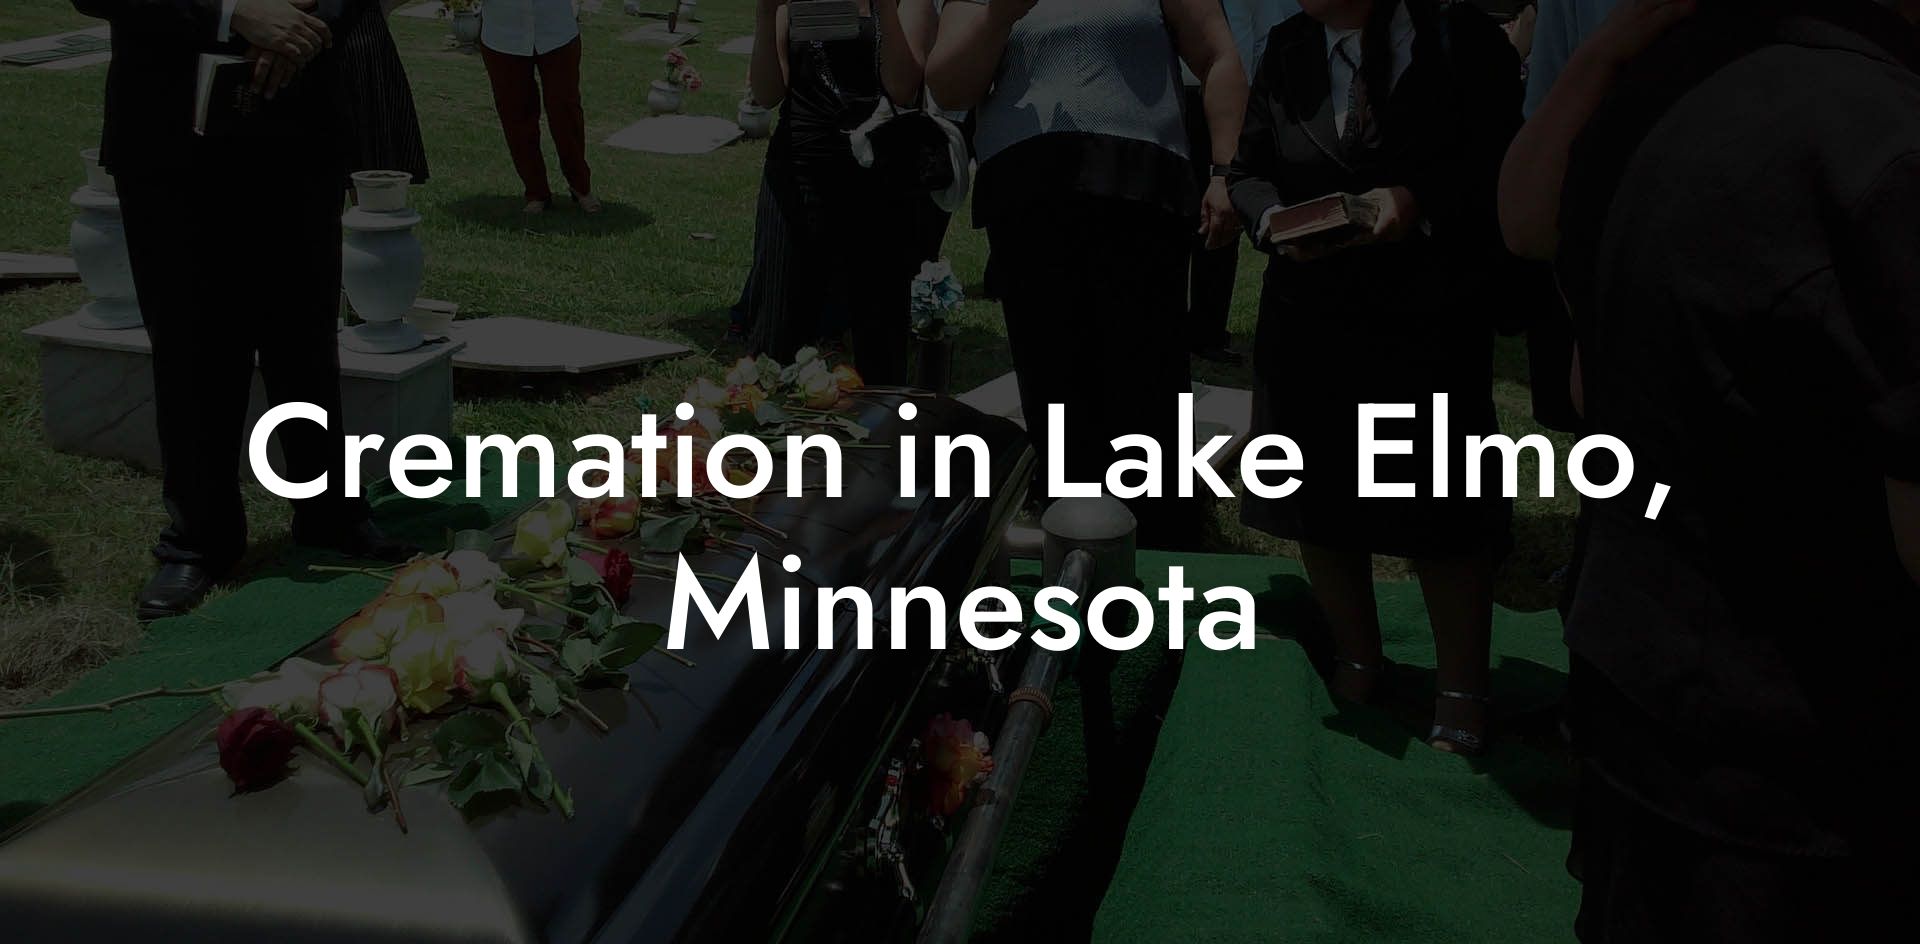 Cremation in Lake Elmo, Minnesota